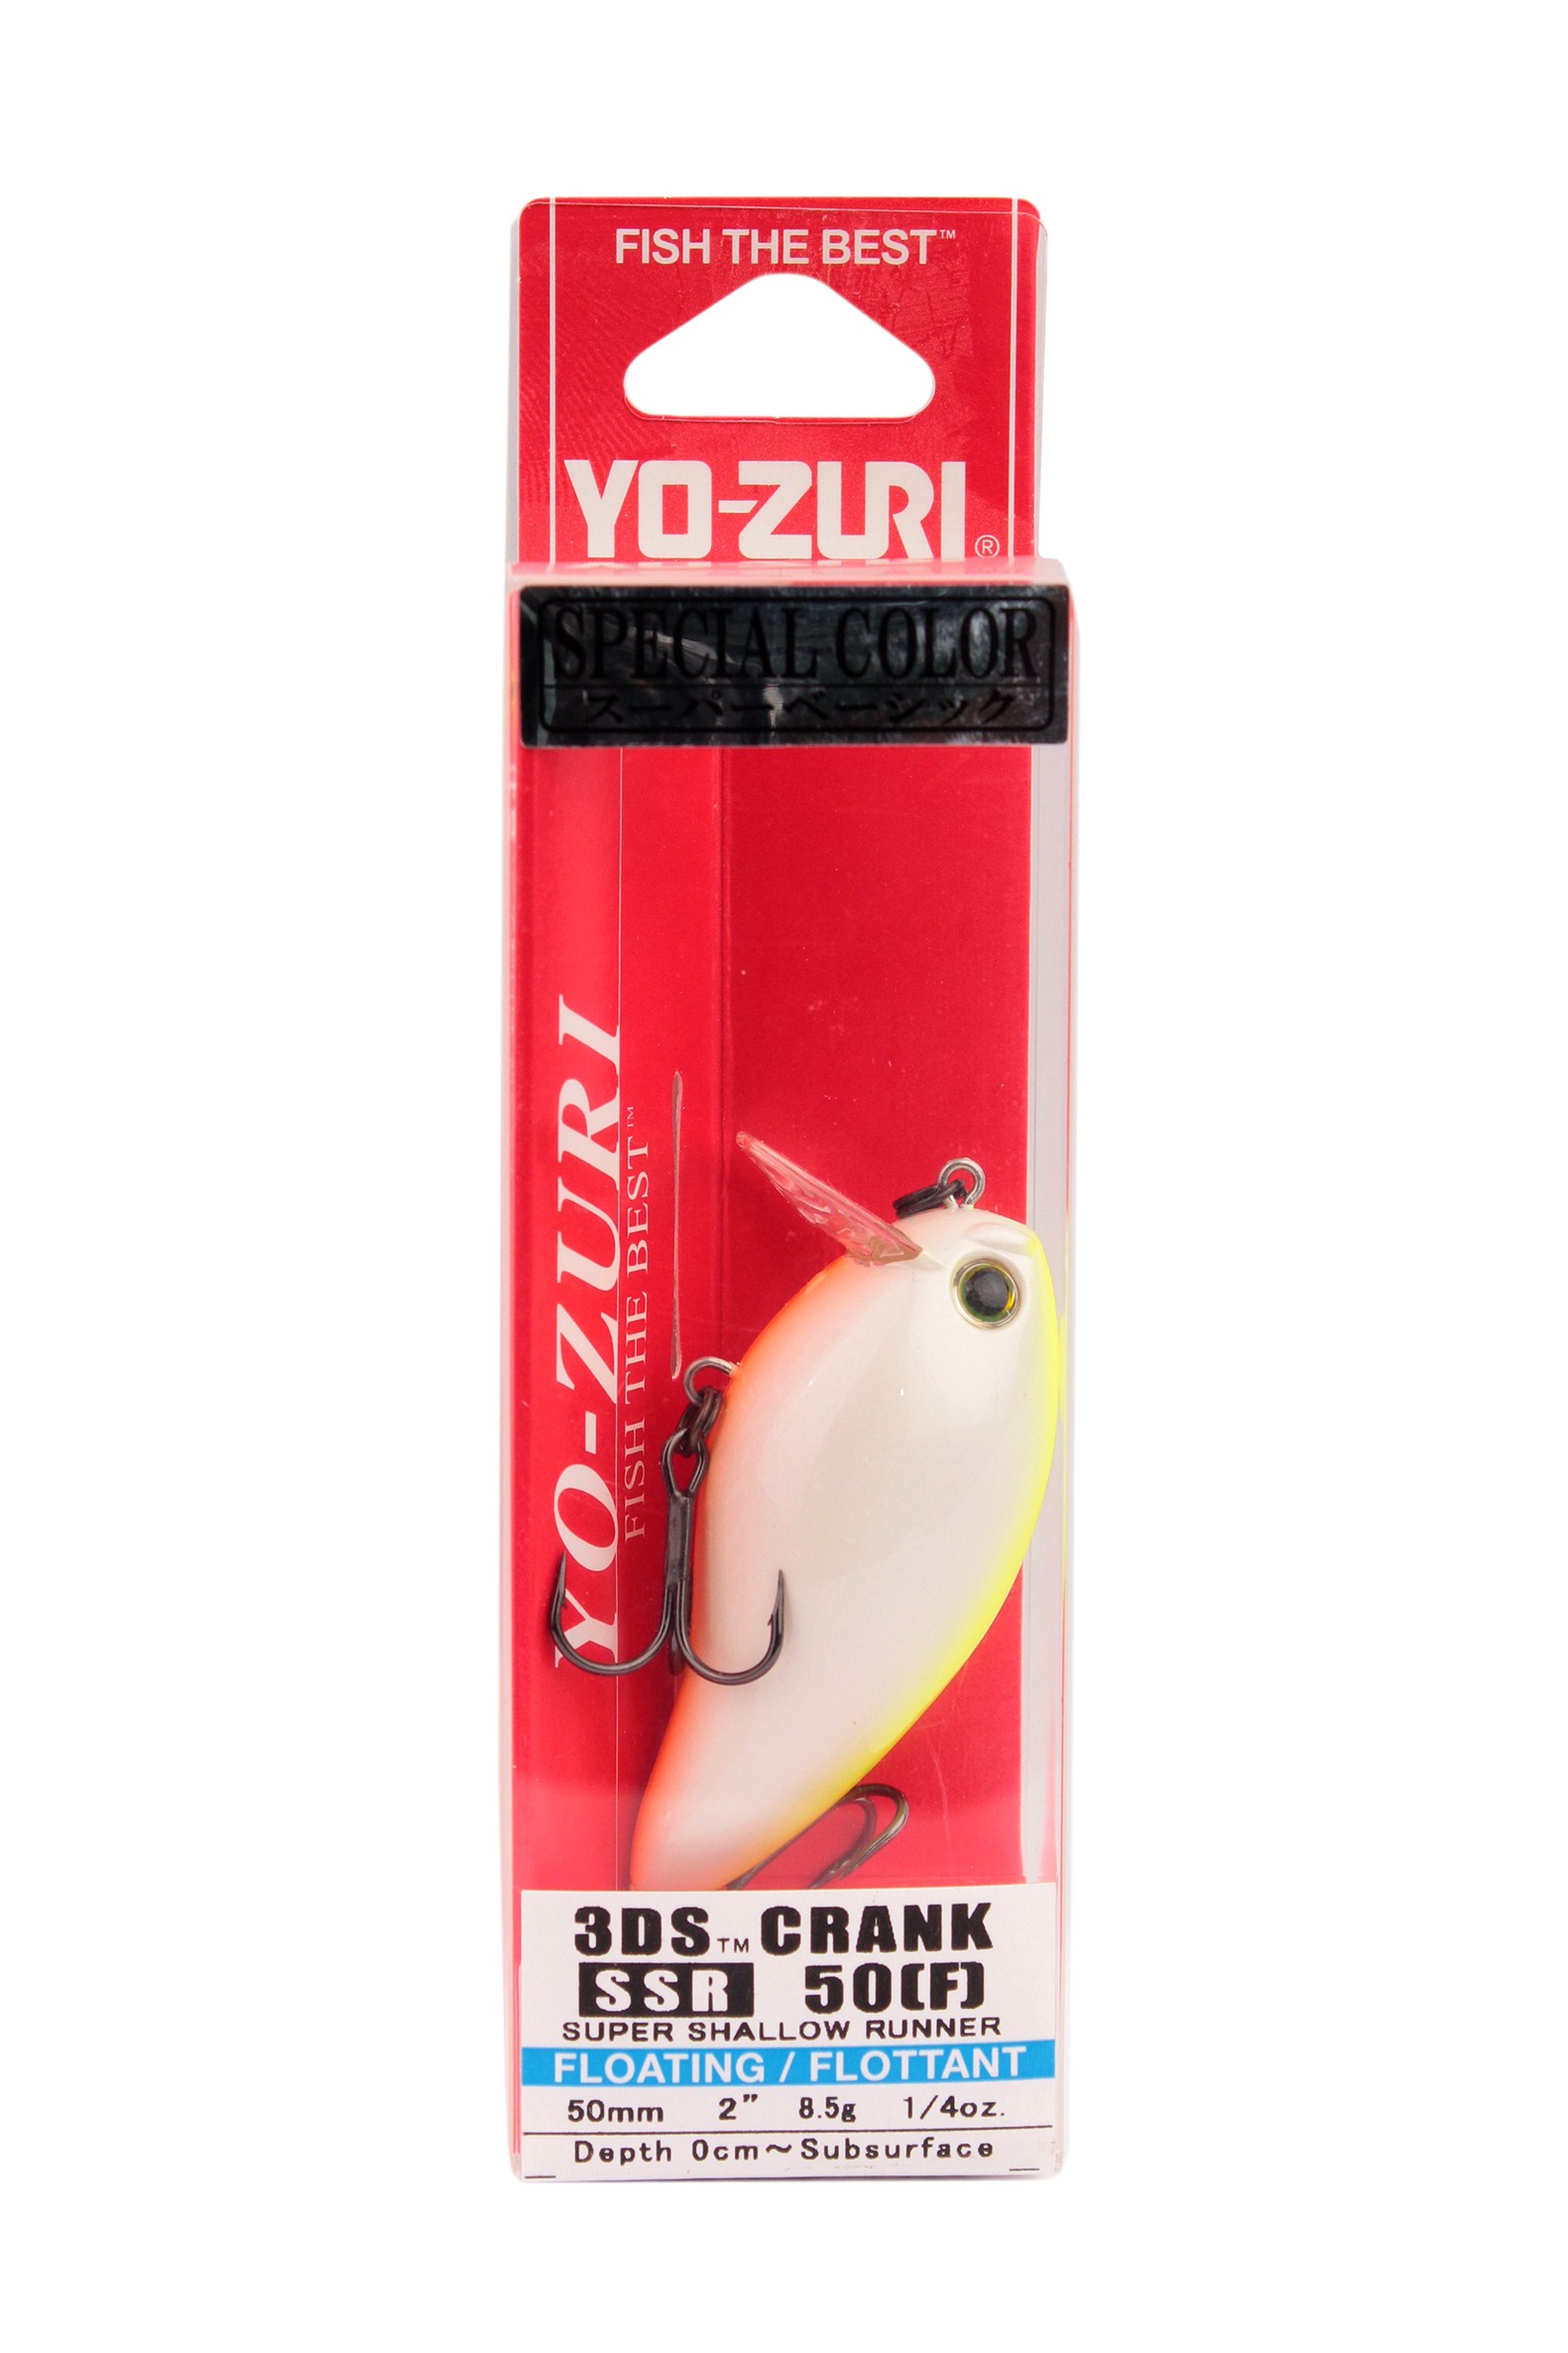 Воблер Yo-Zuri 3DS Crank SSR F1138 PCL - фото 1